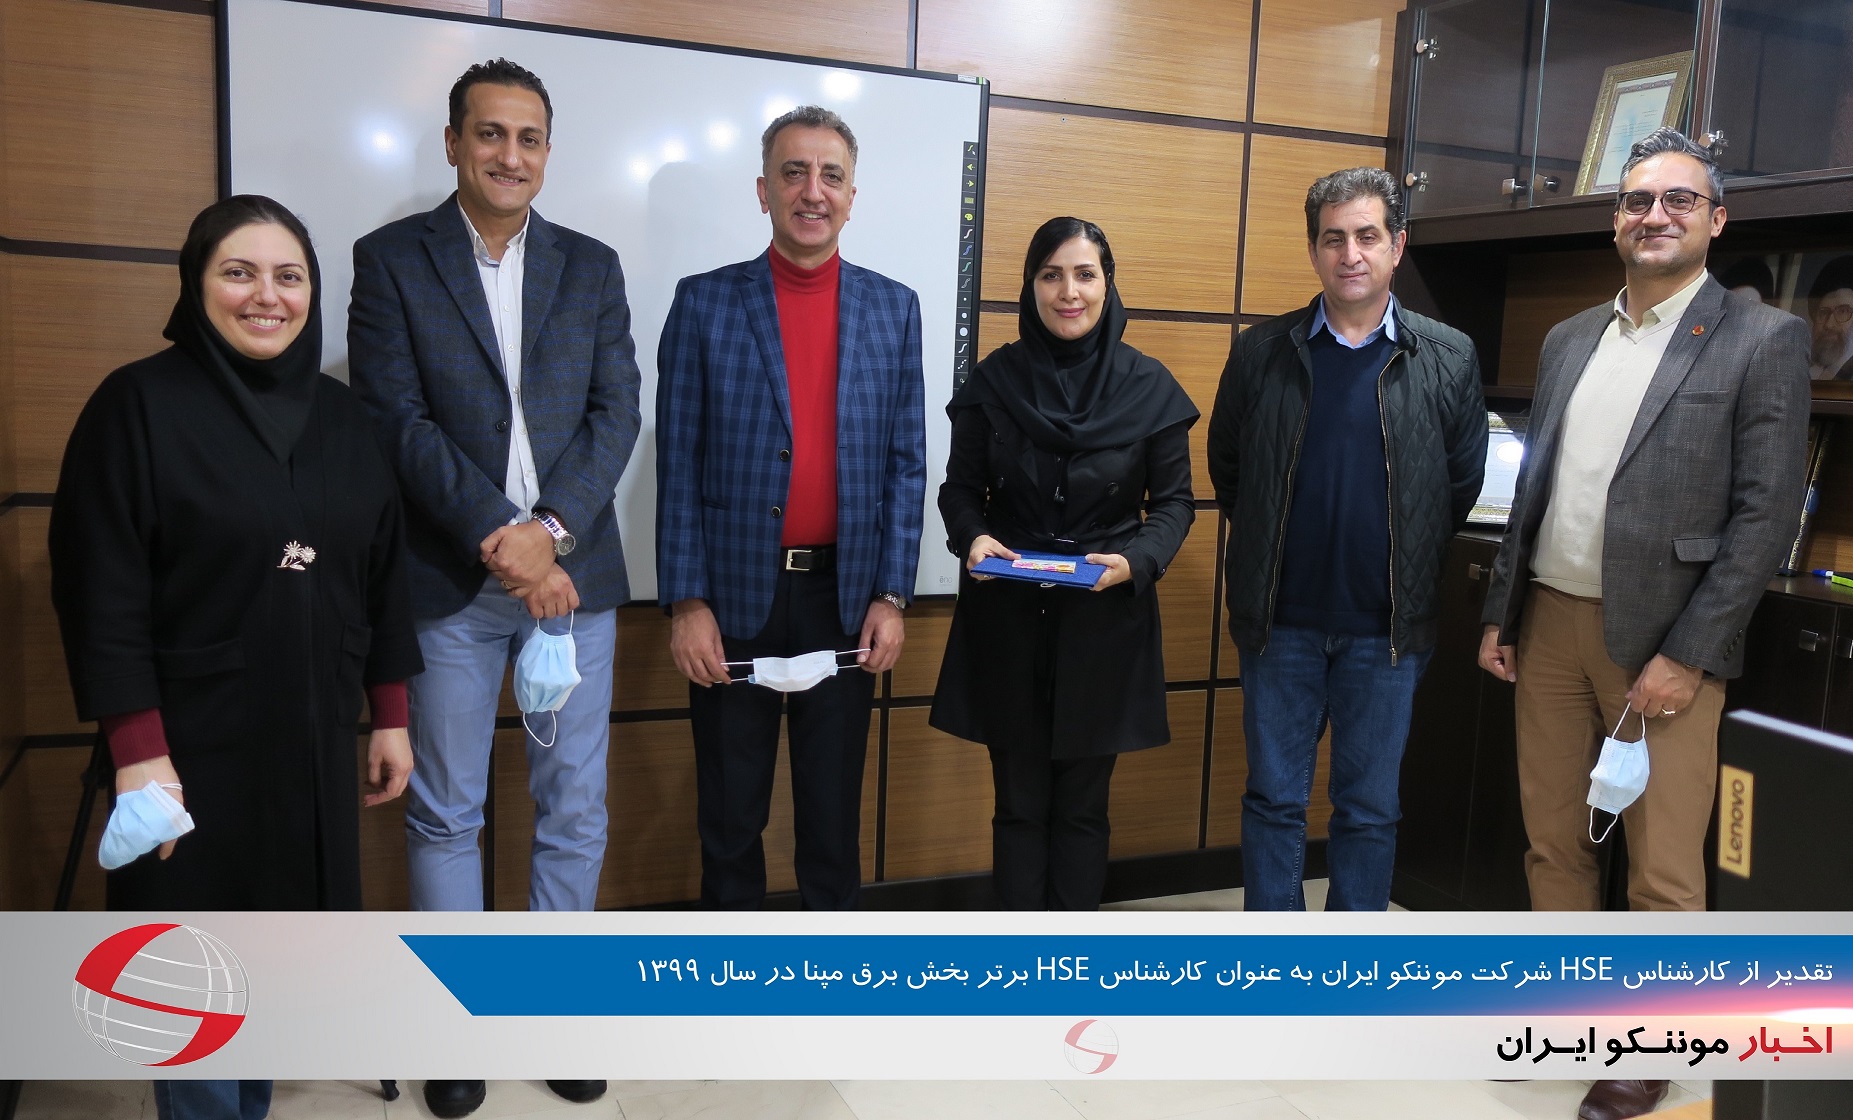  The efforts of Ms. Fatemeh Beheshti, the HSE supervisor of Monenco were appreciated